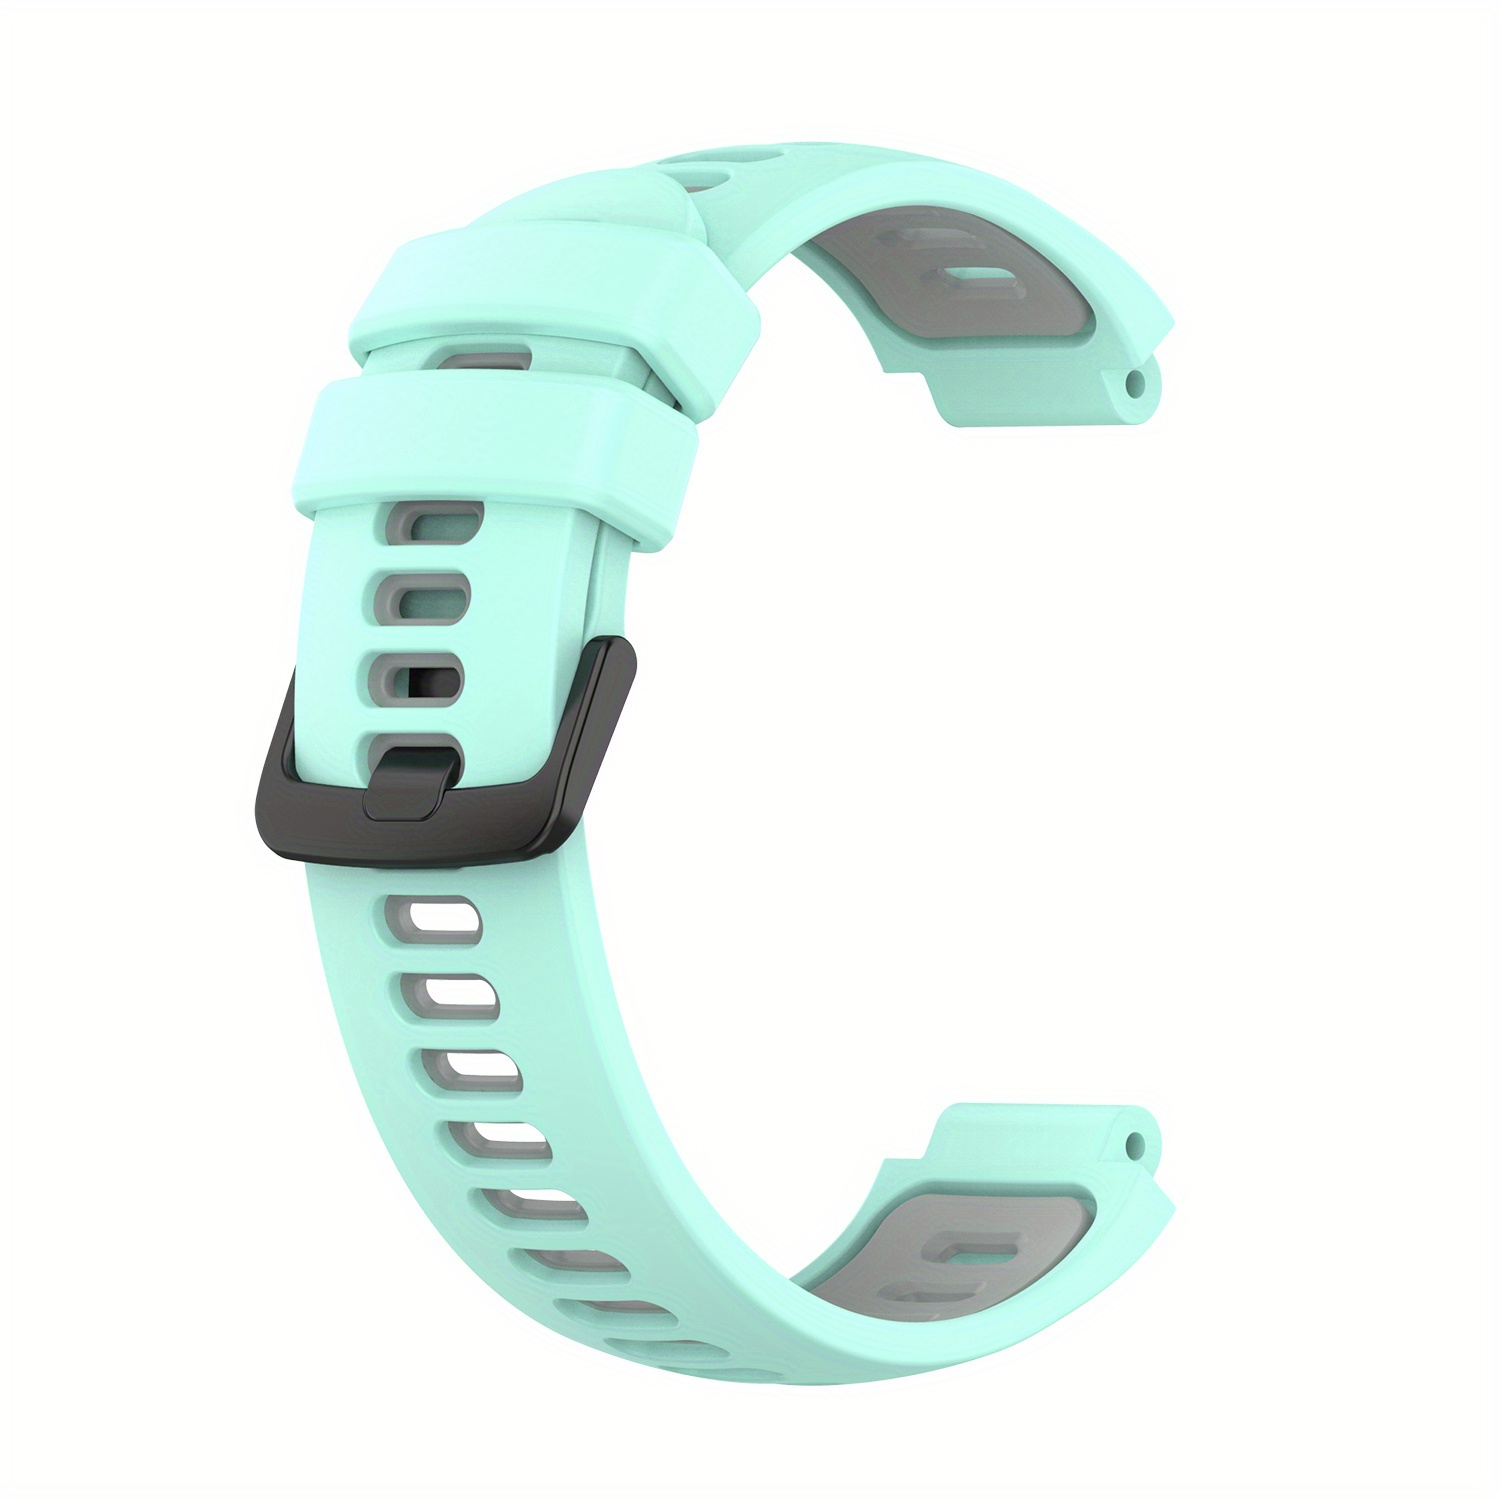  Ueohitsct - Correa de silicona para reloj Garmin Forerunner  735xt 220 230, diseño de dos colores : Deportes y Actividades al Aire Libre